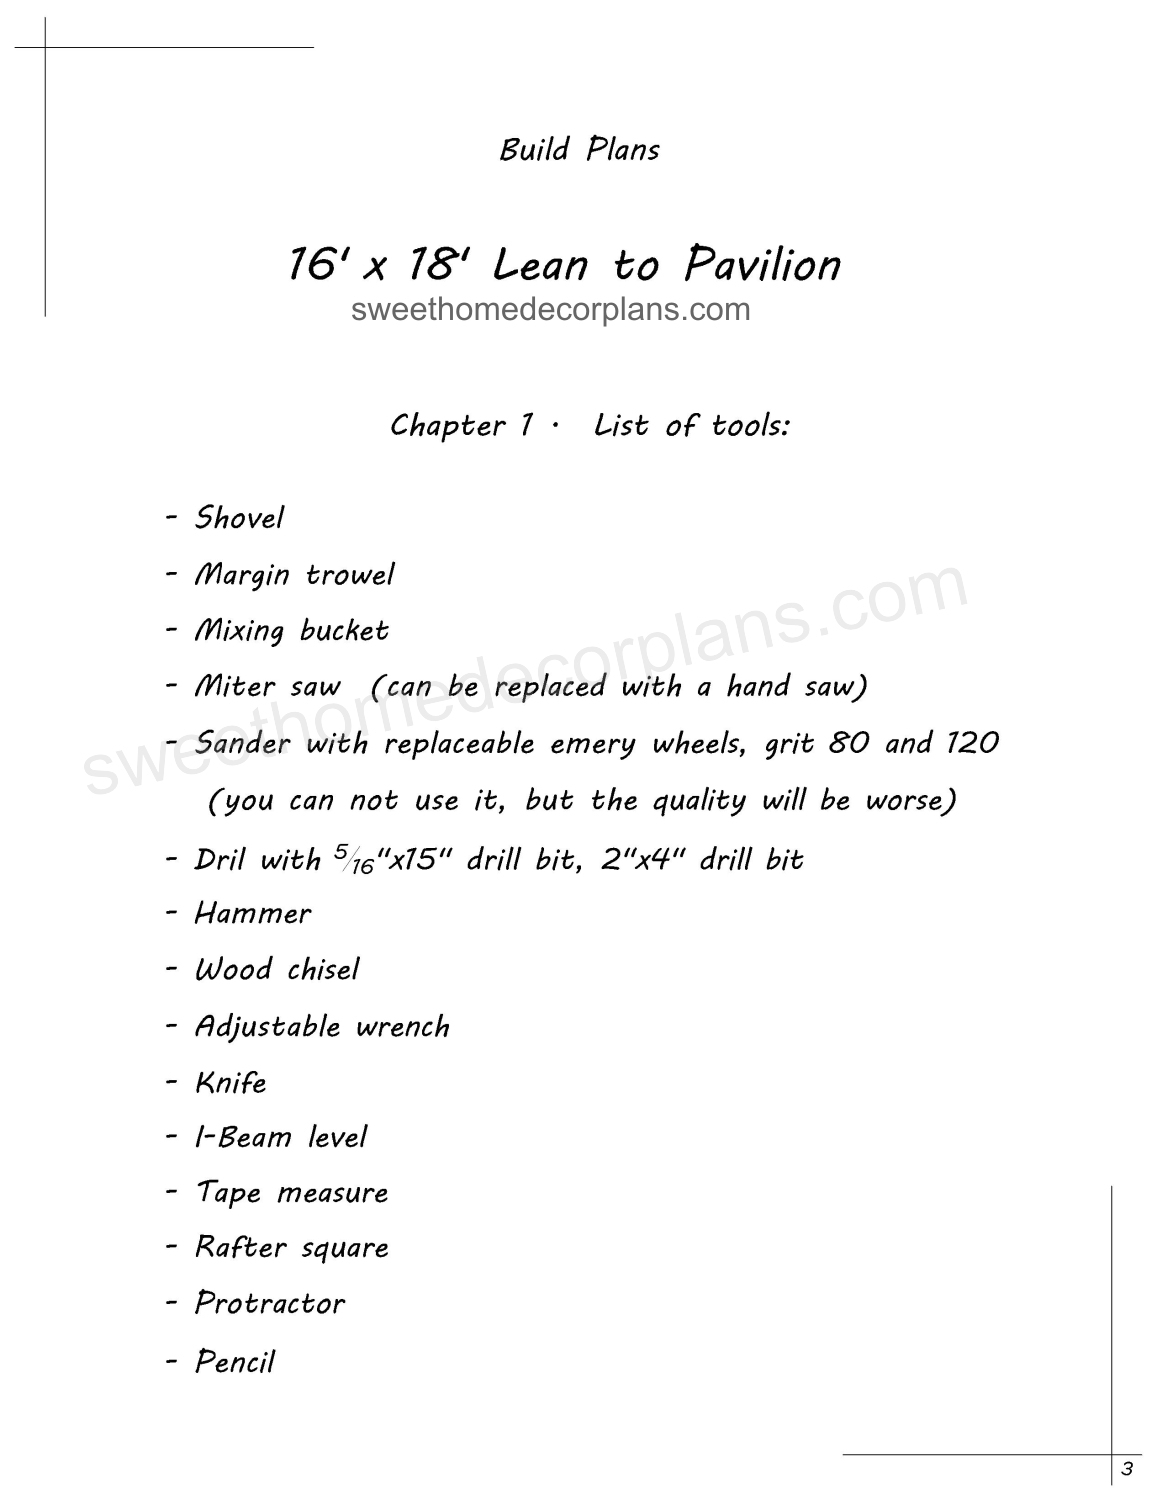 list-of-tools-16-x-18-lean-to-pavilion-plans